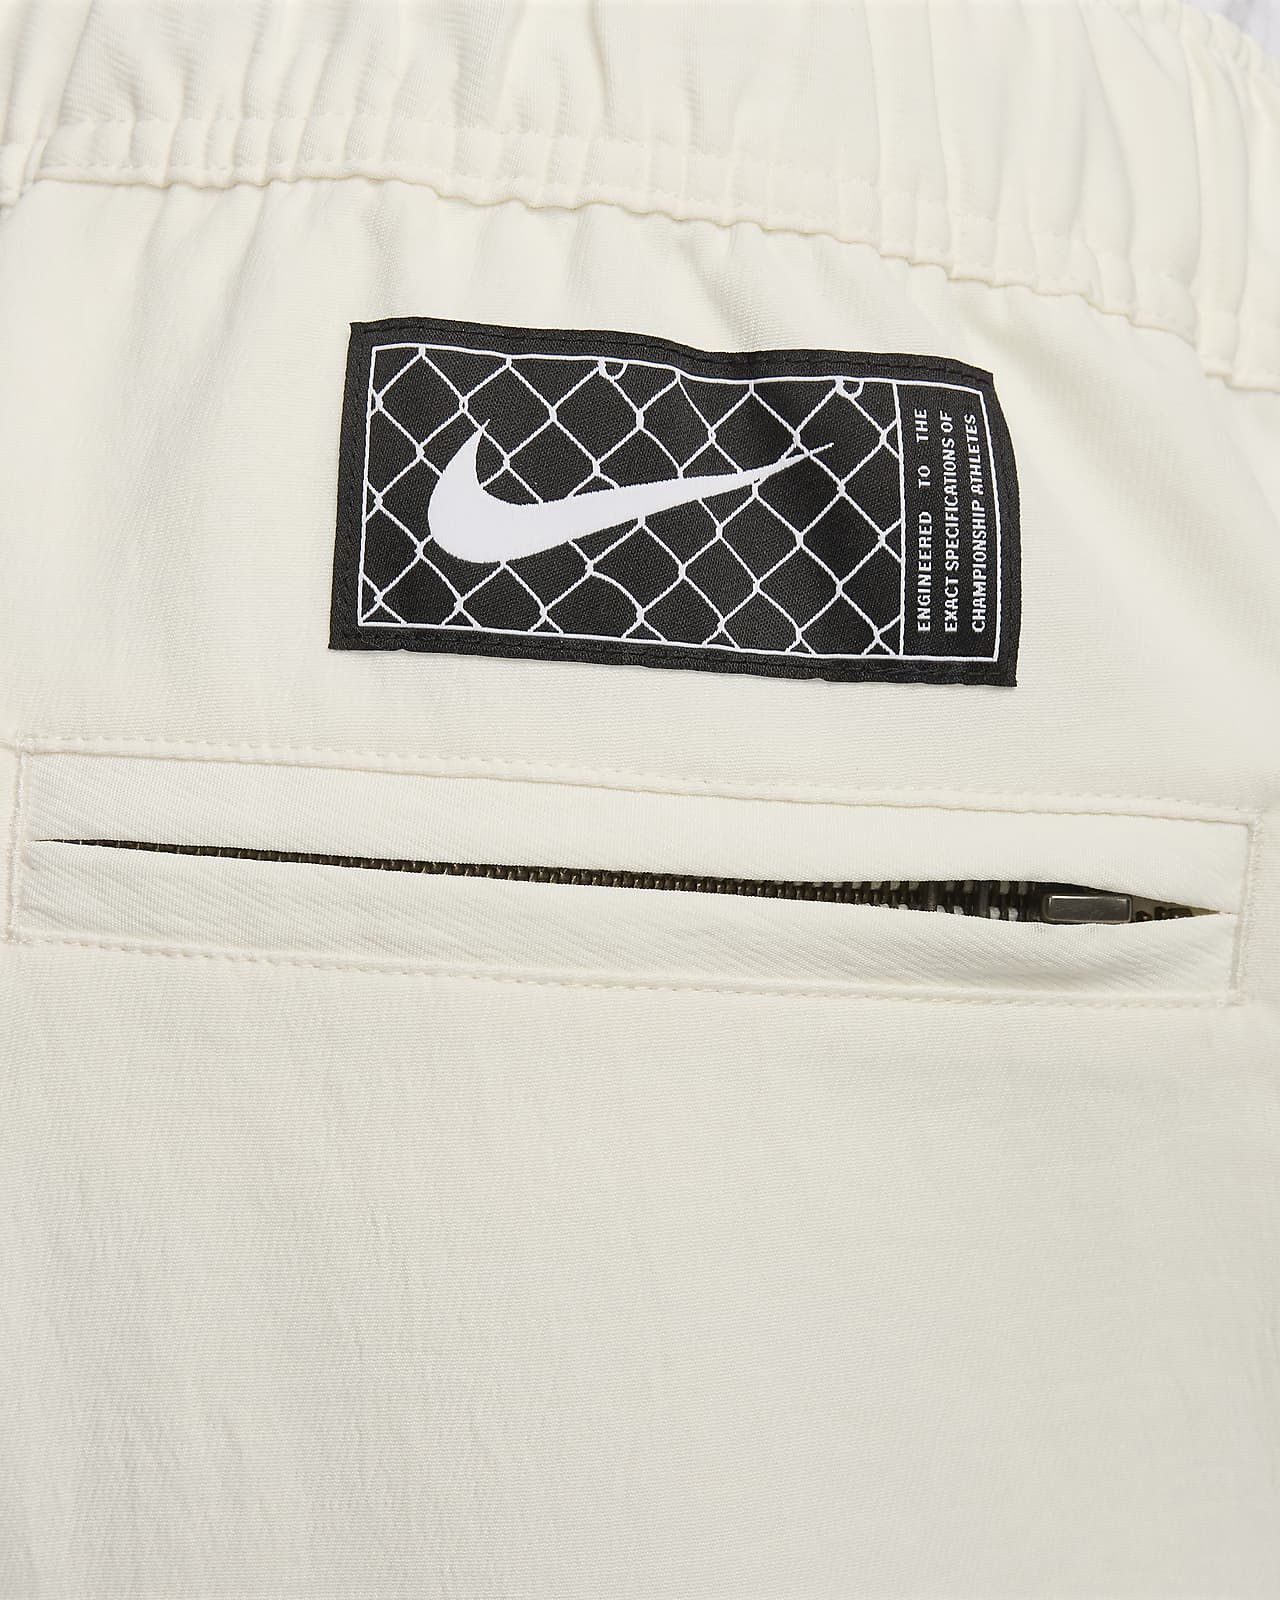 FOG x Nike NBA Tear Away Pants – The Wicker Bee